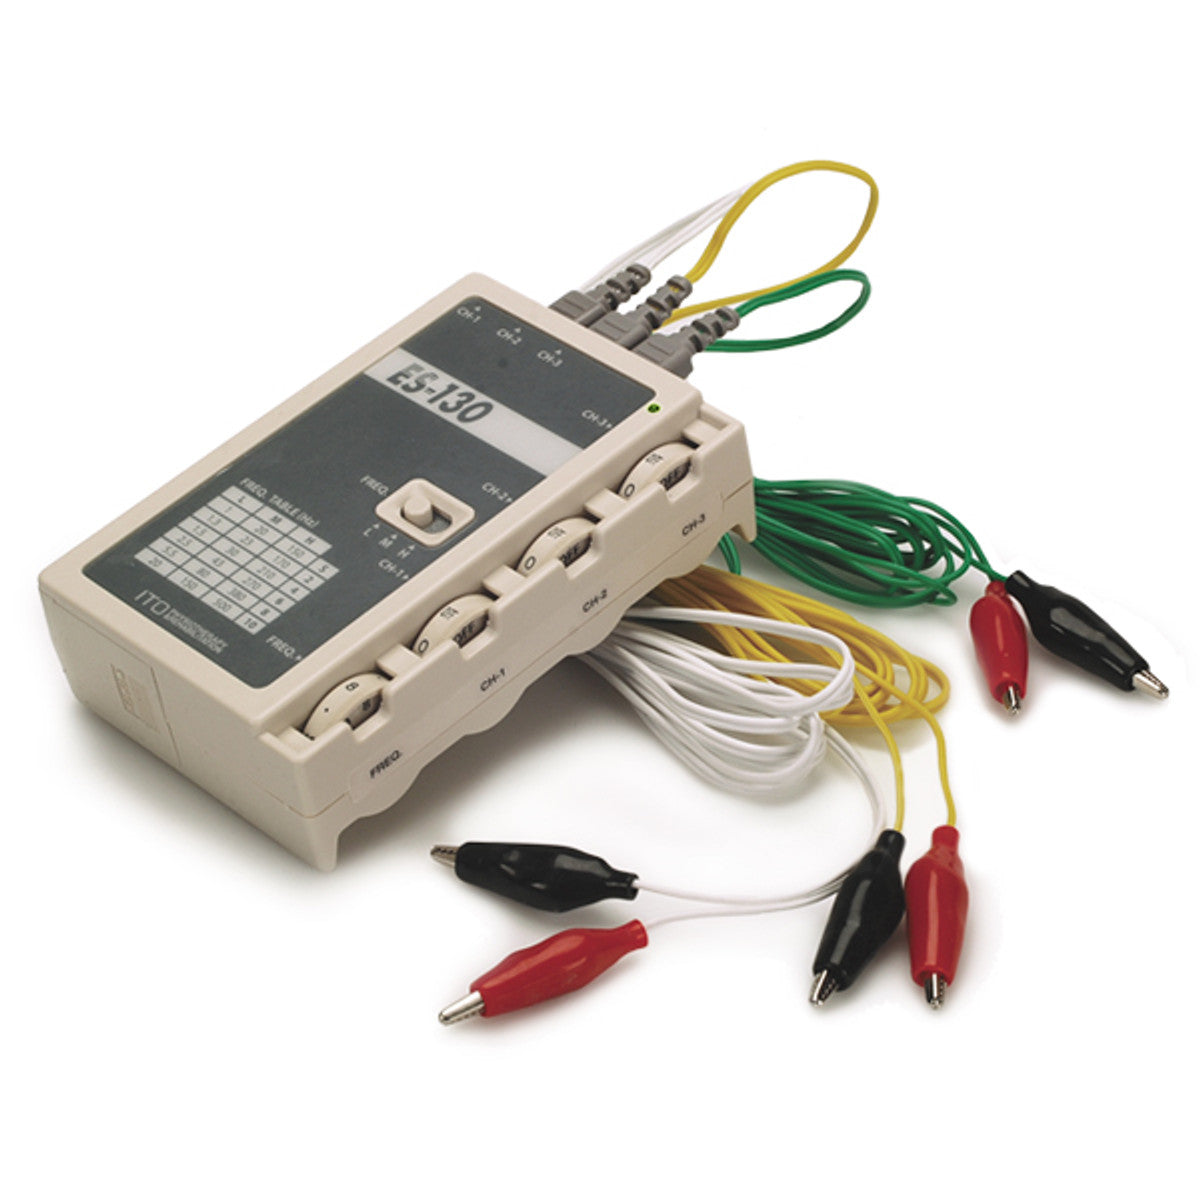 ITO ES-130 3 Channel Palm Size ElectroAcupuncture Unit